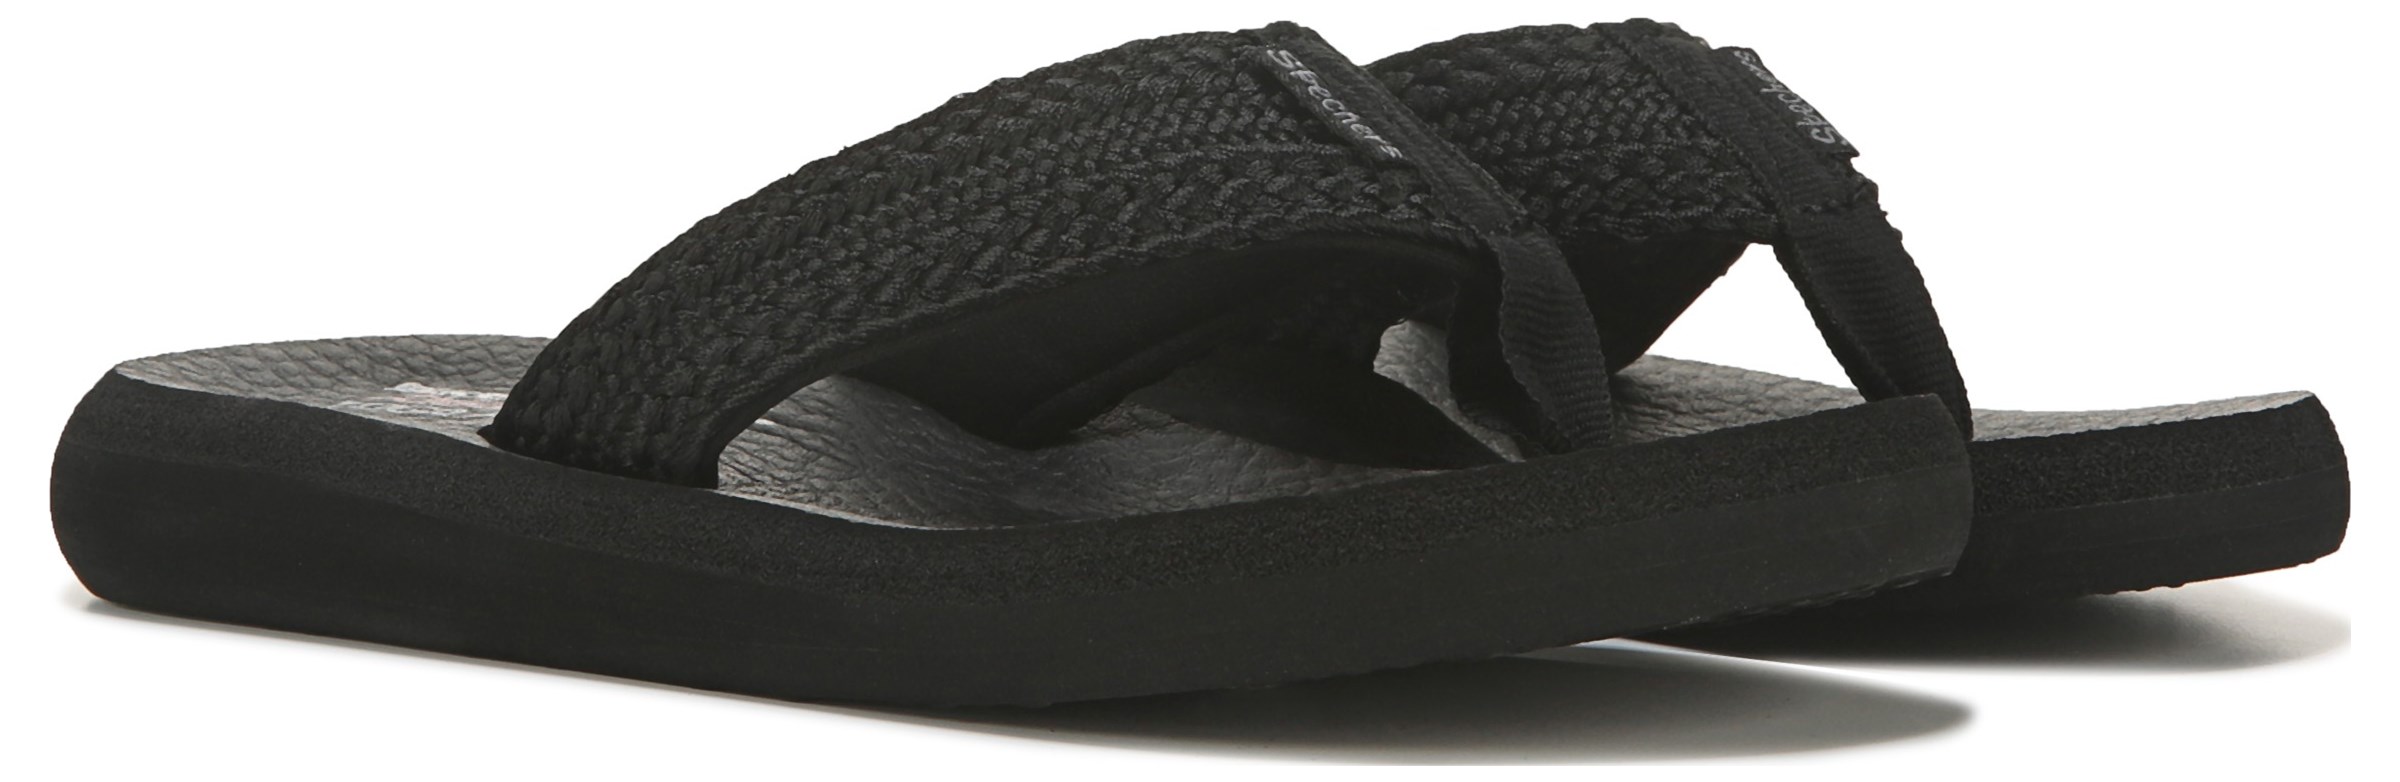 Skechers Yoga Foam 31601 Slip On Thong Flip Flop Sandals Women Sz 10 Black  bling